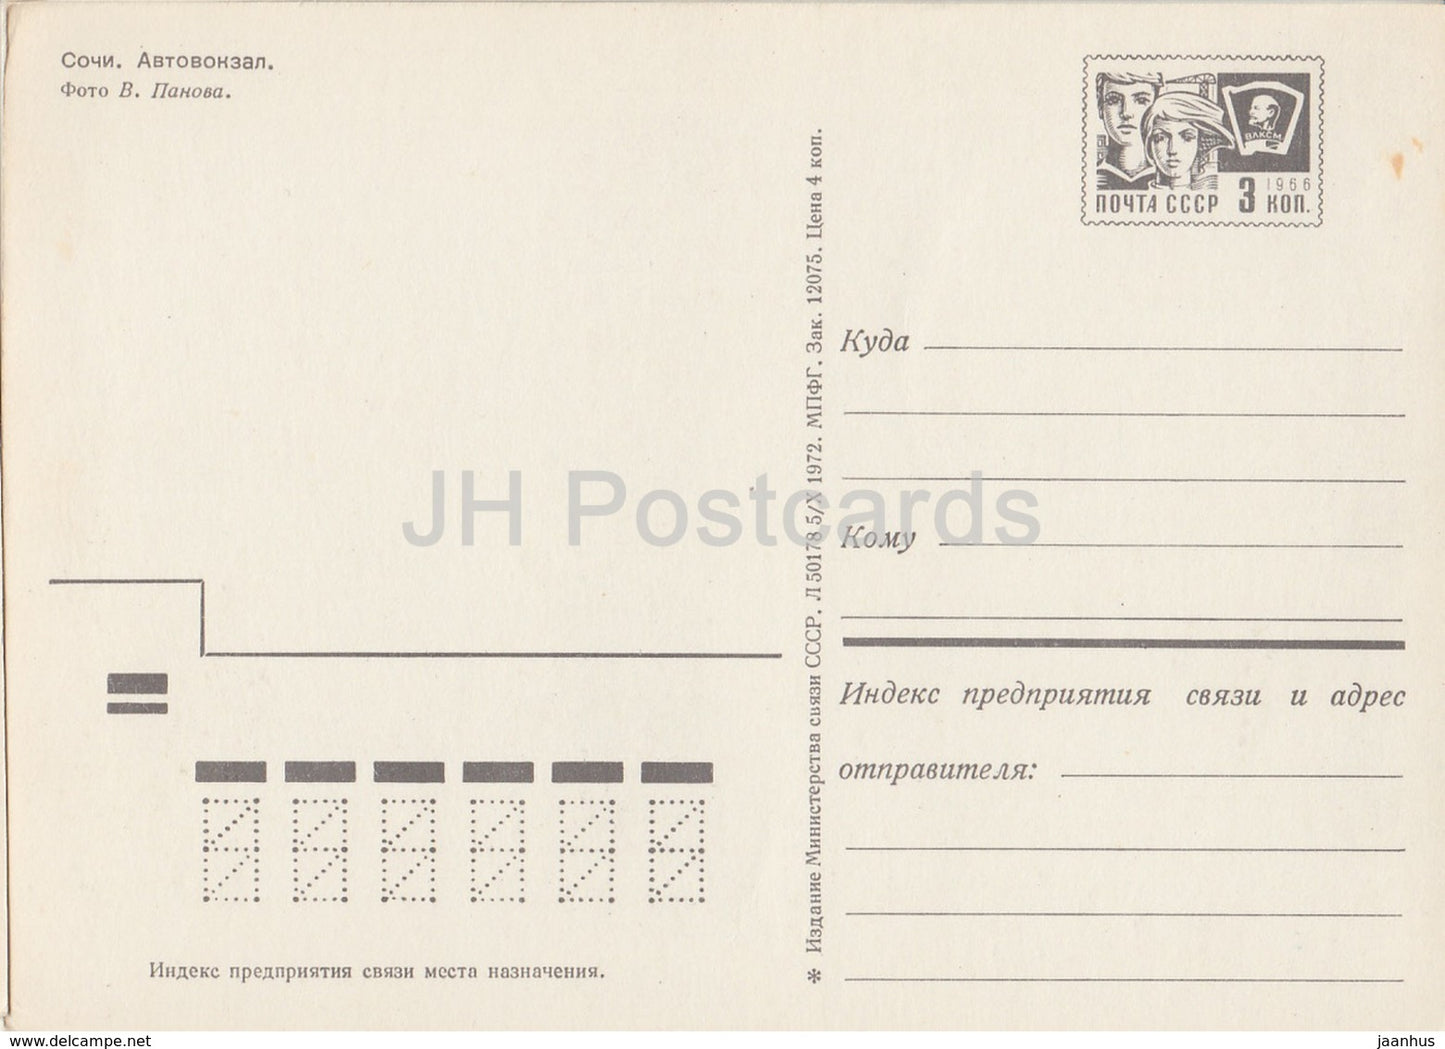 Sochi - Bus Station - Ikarus - postal stationery - 1972 - Russia USSR - unused